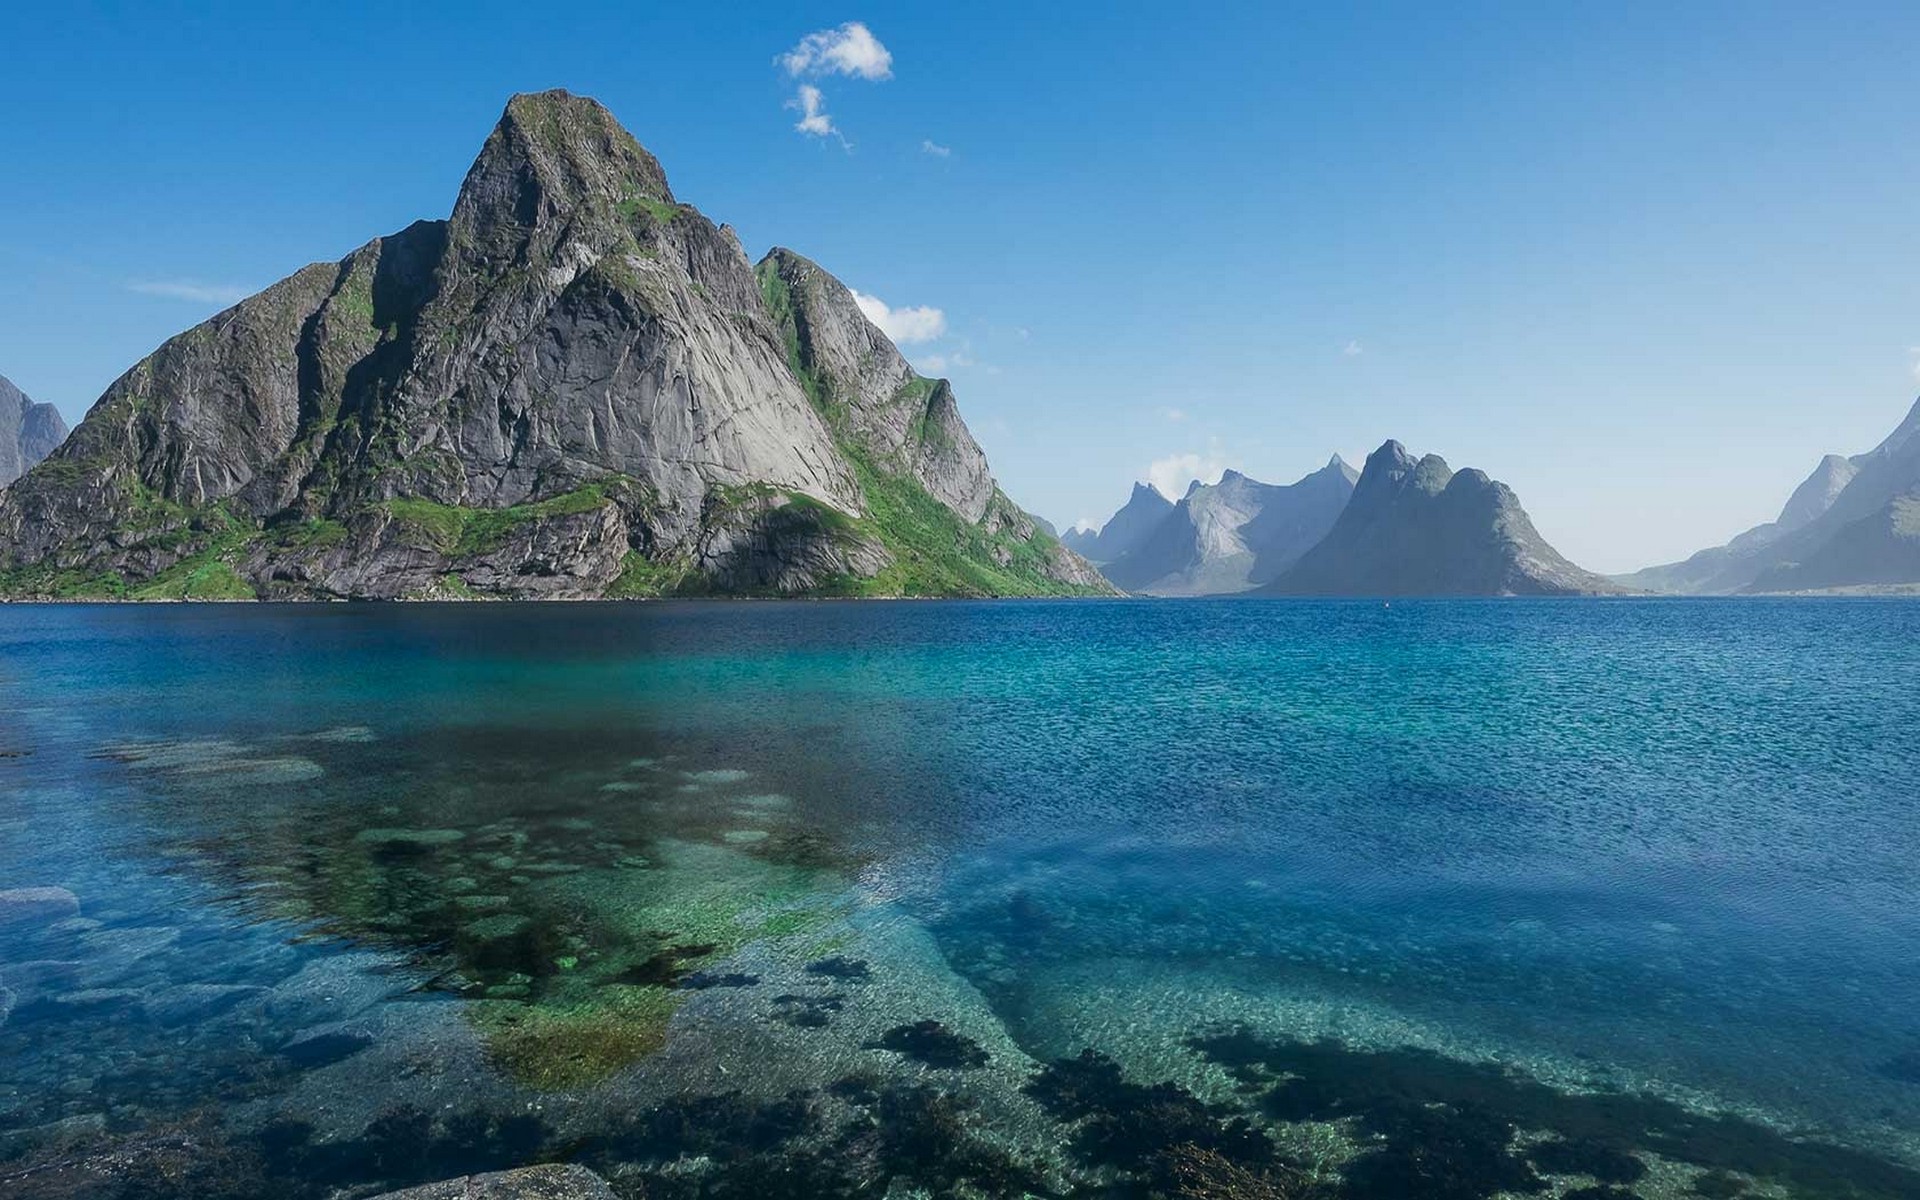 islandia wallpaper,natural landscape,body of water,nature,mountain,mountainous landforms